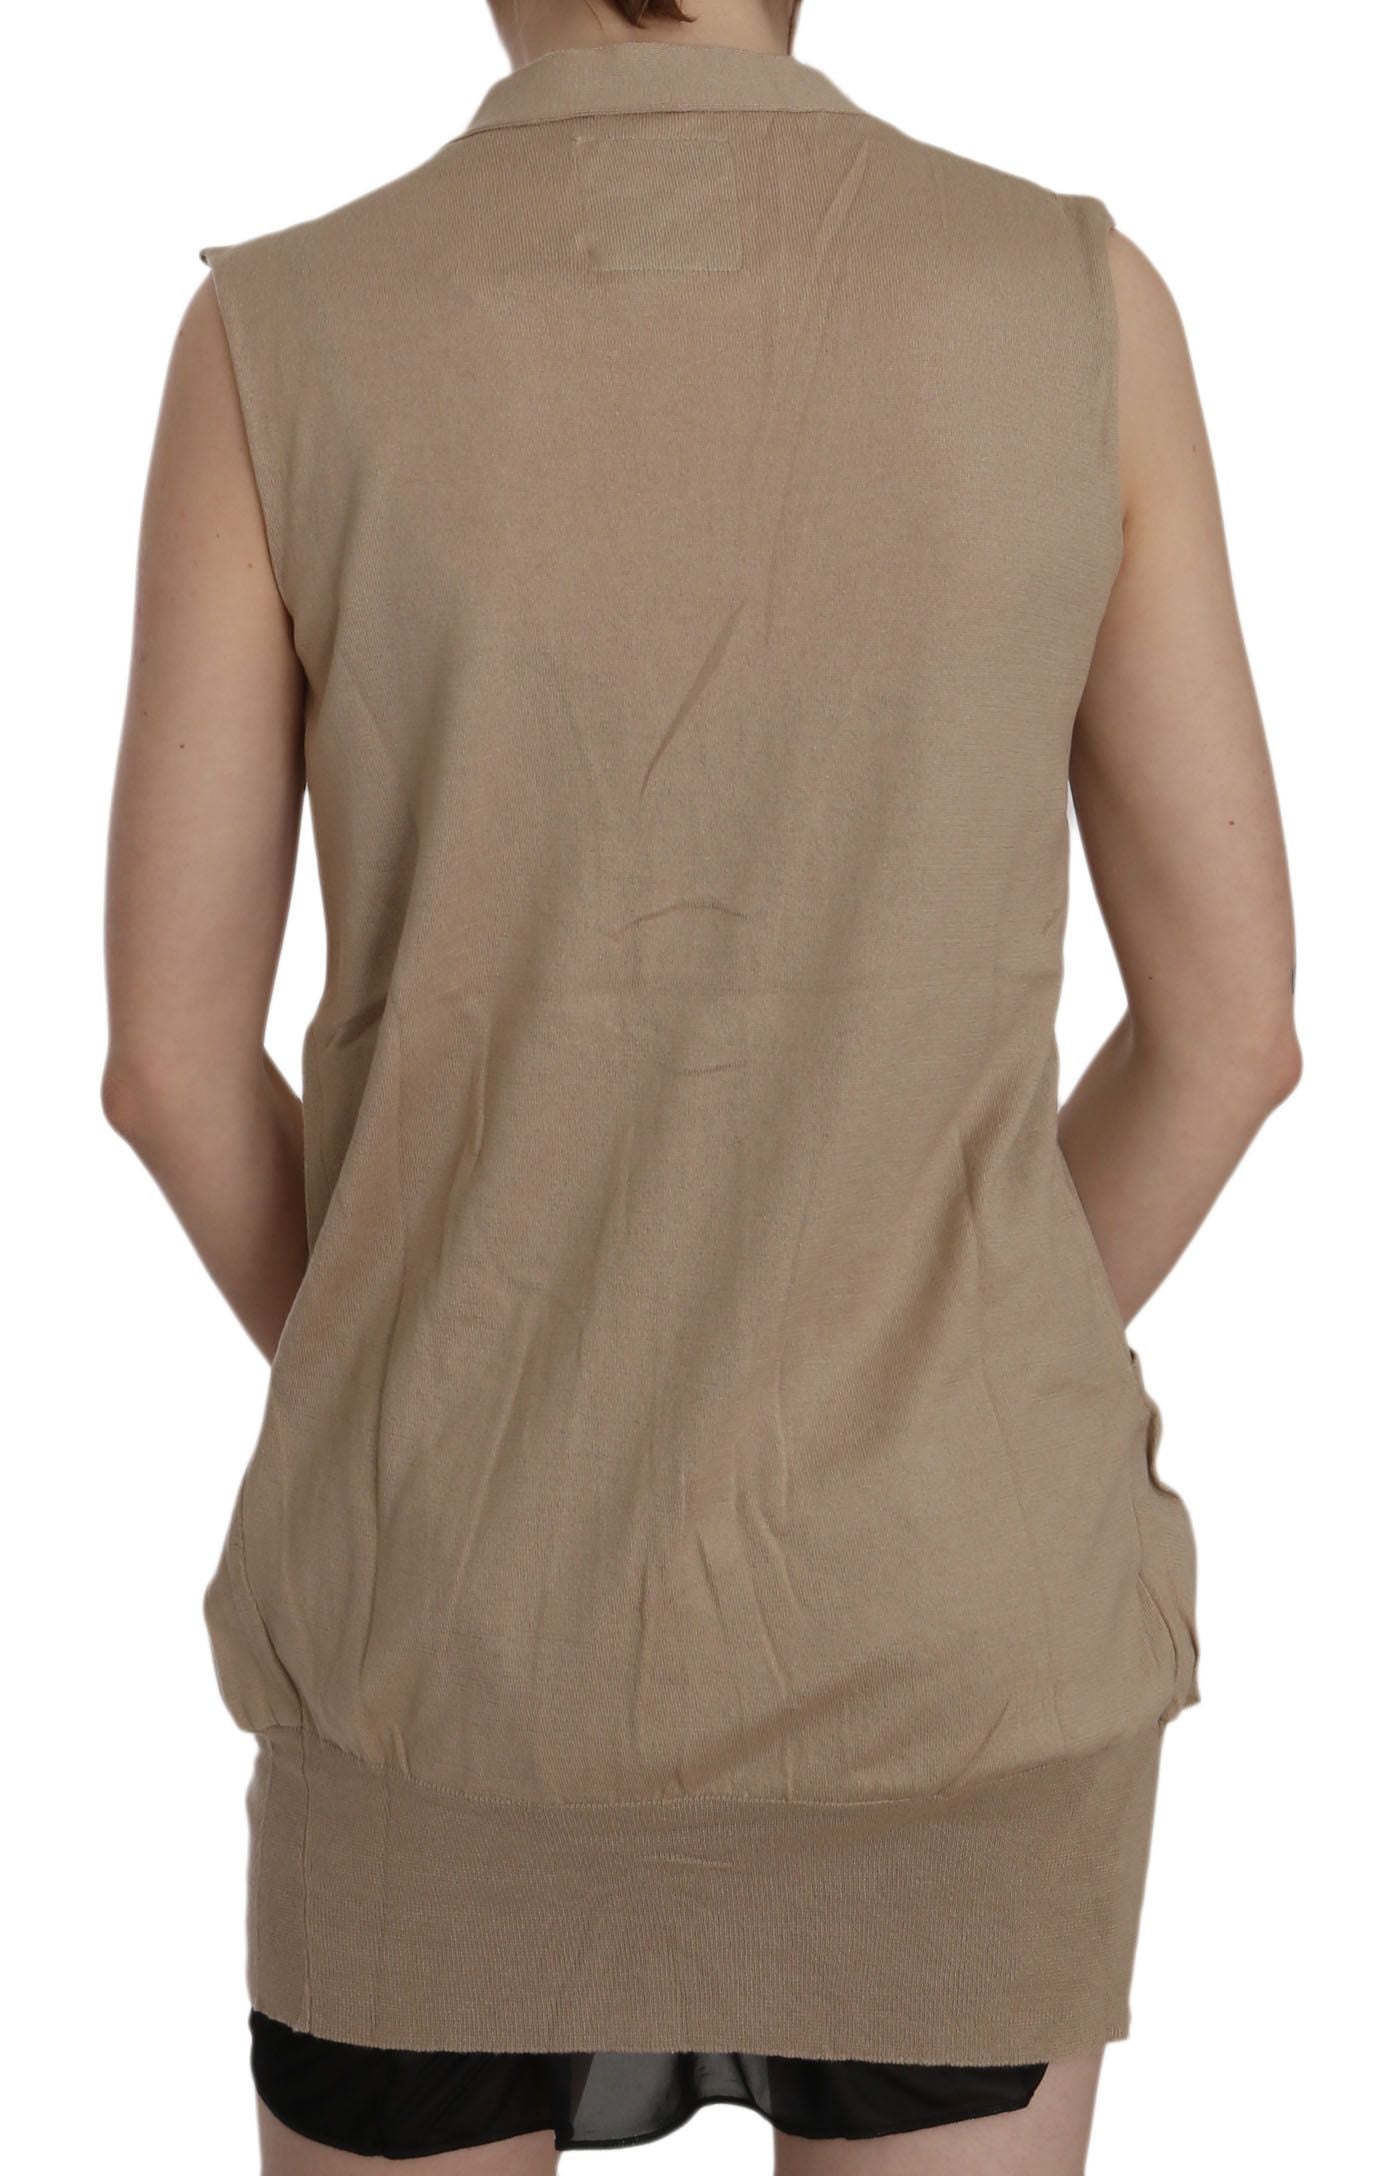 Brown 100% Cotton Sleeveless Cardigan Top Vest